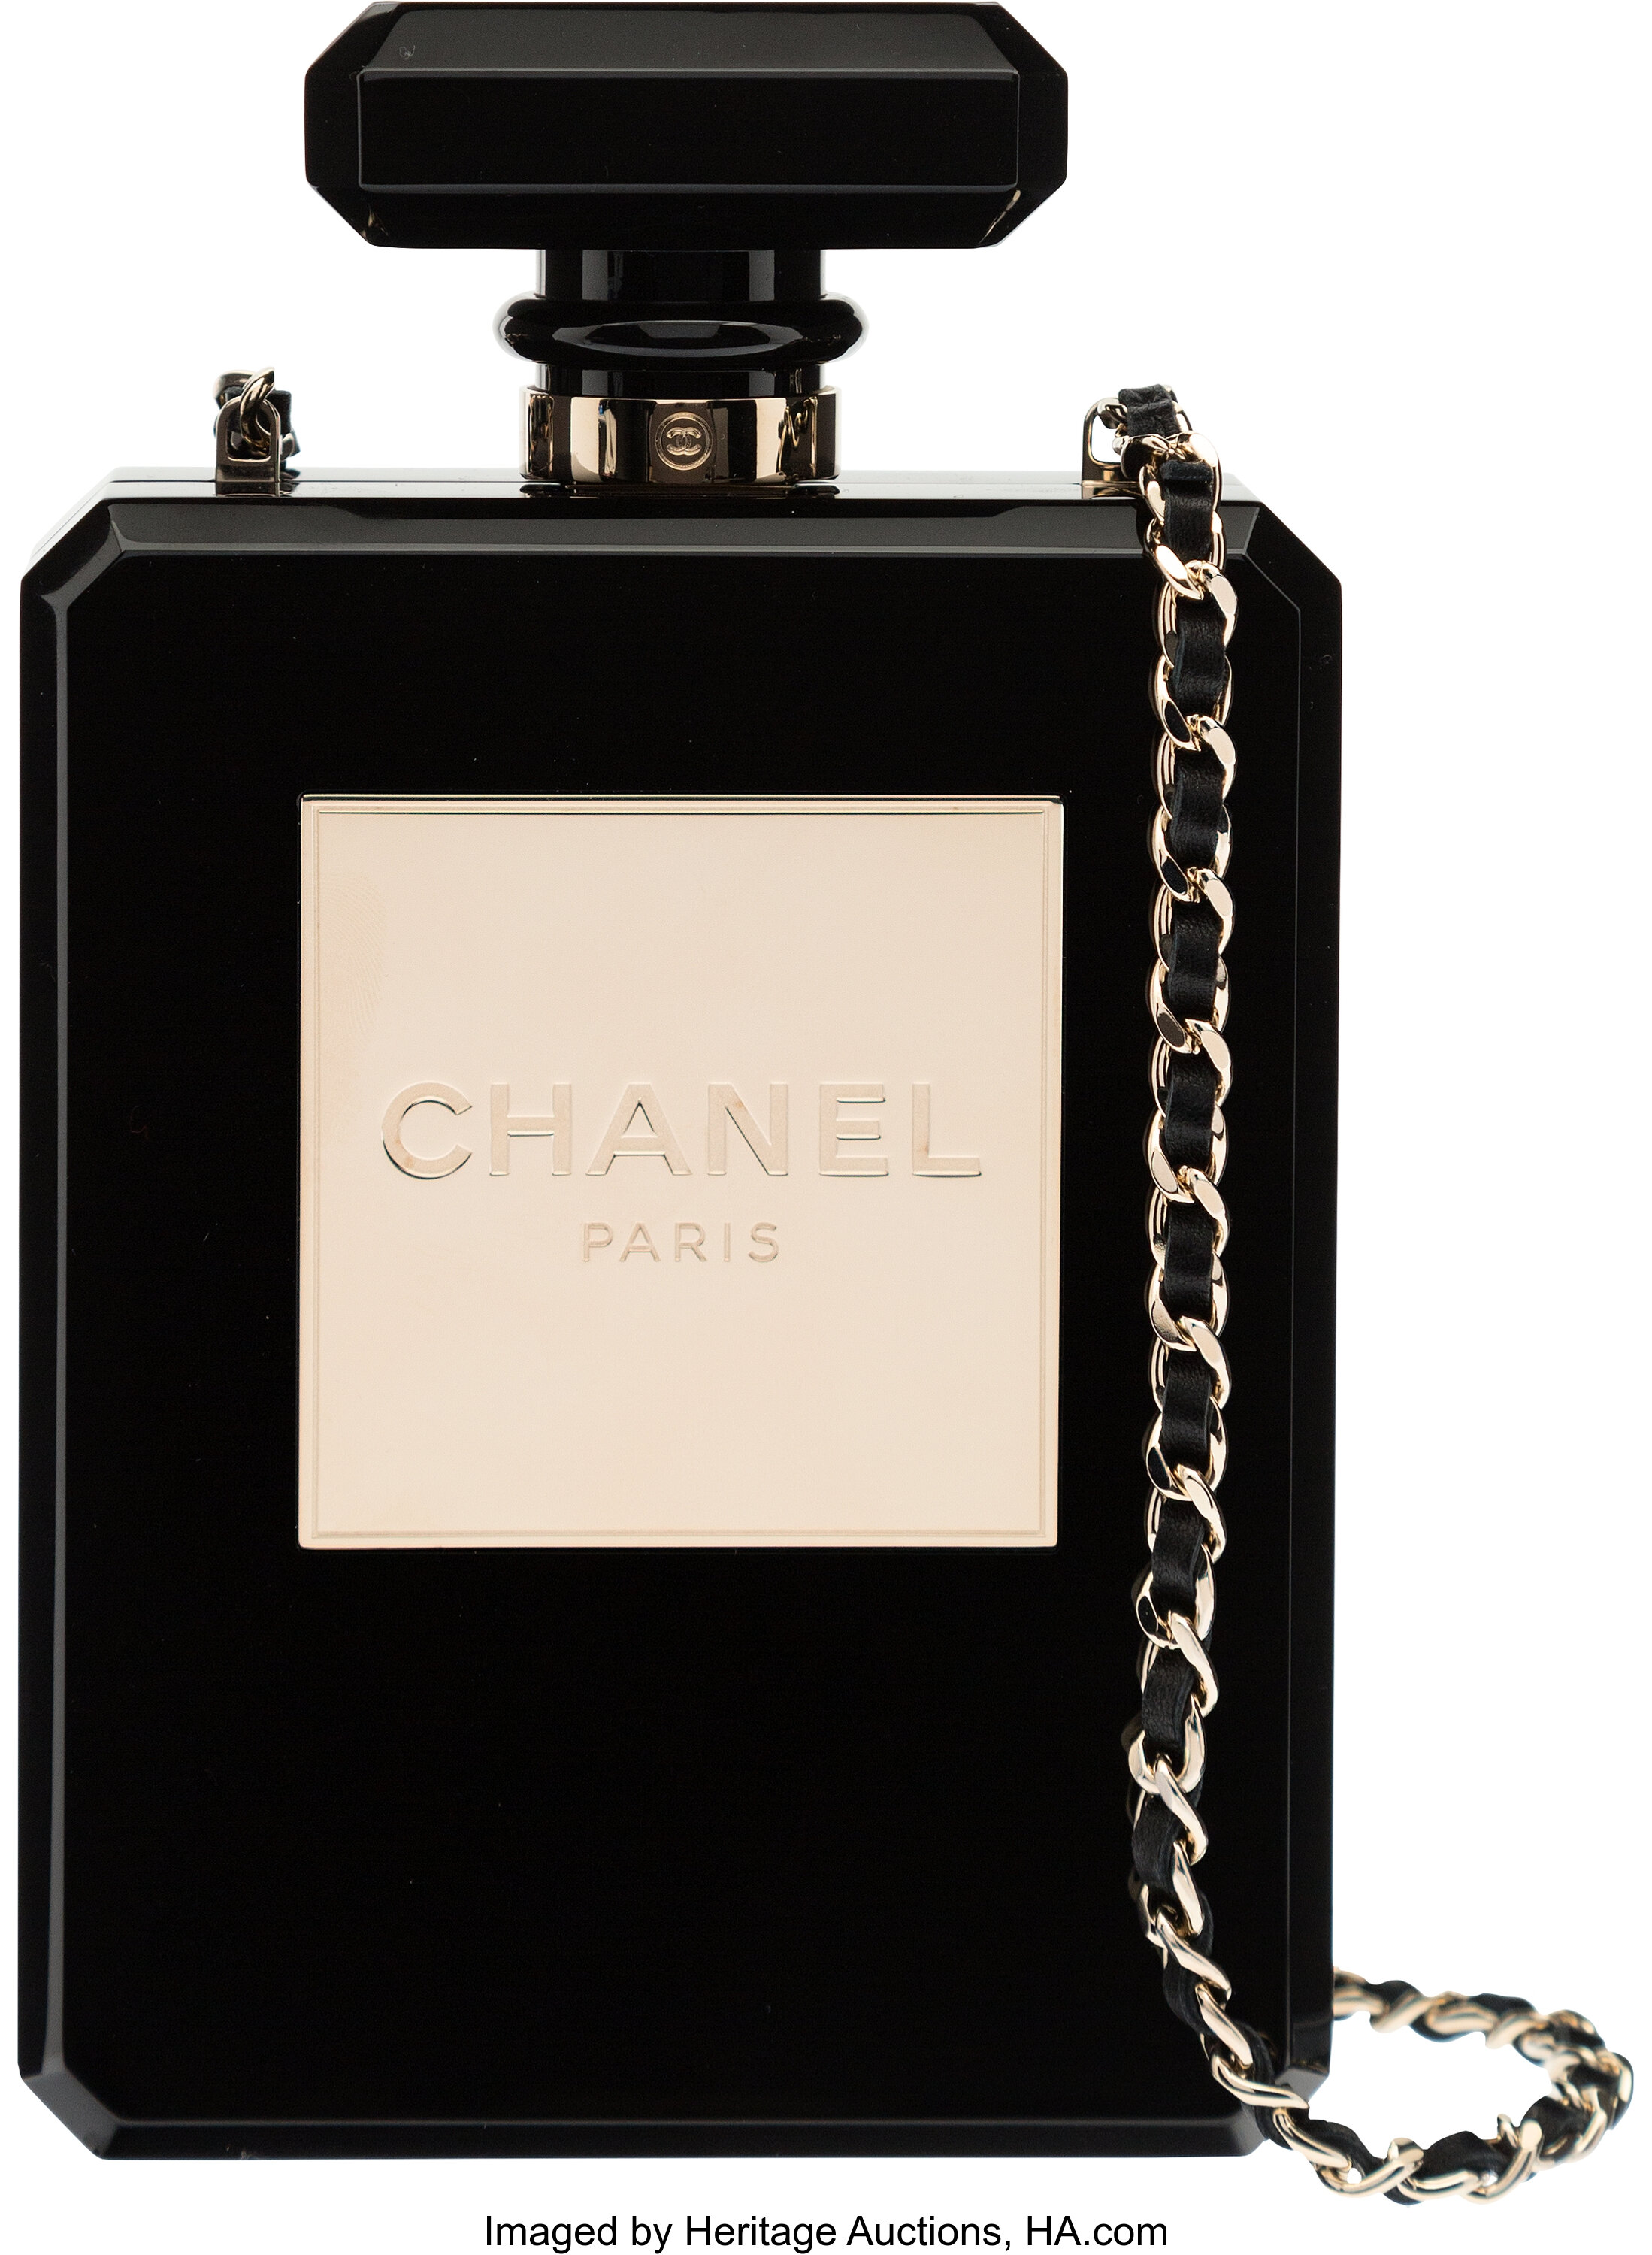 Chanel Limited Edition Black Plexiglass Perfume Bottle Bag. The